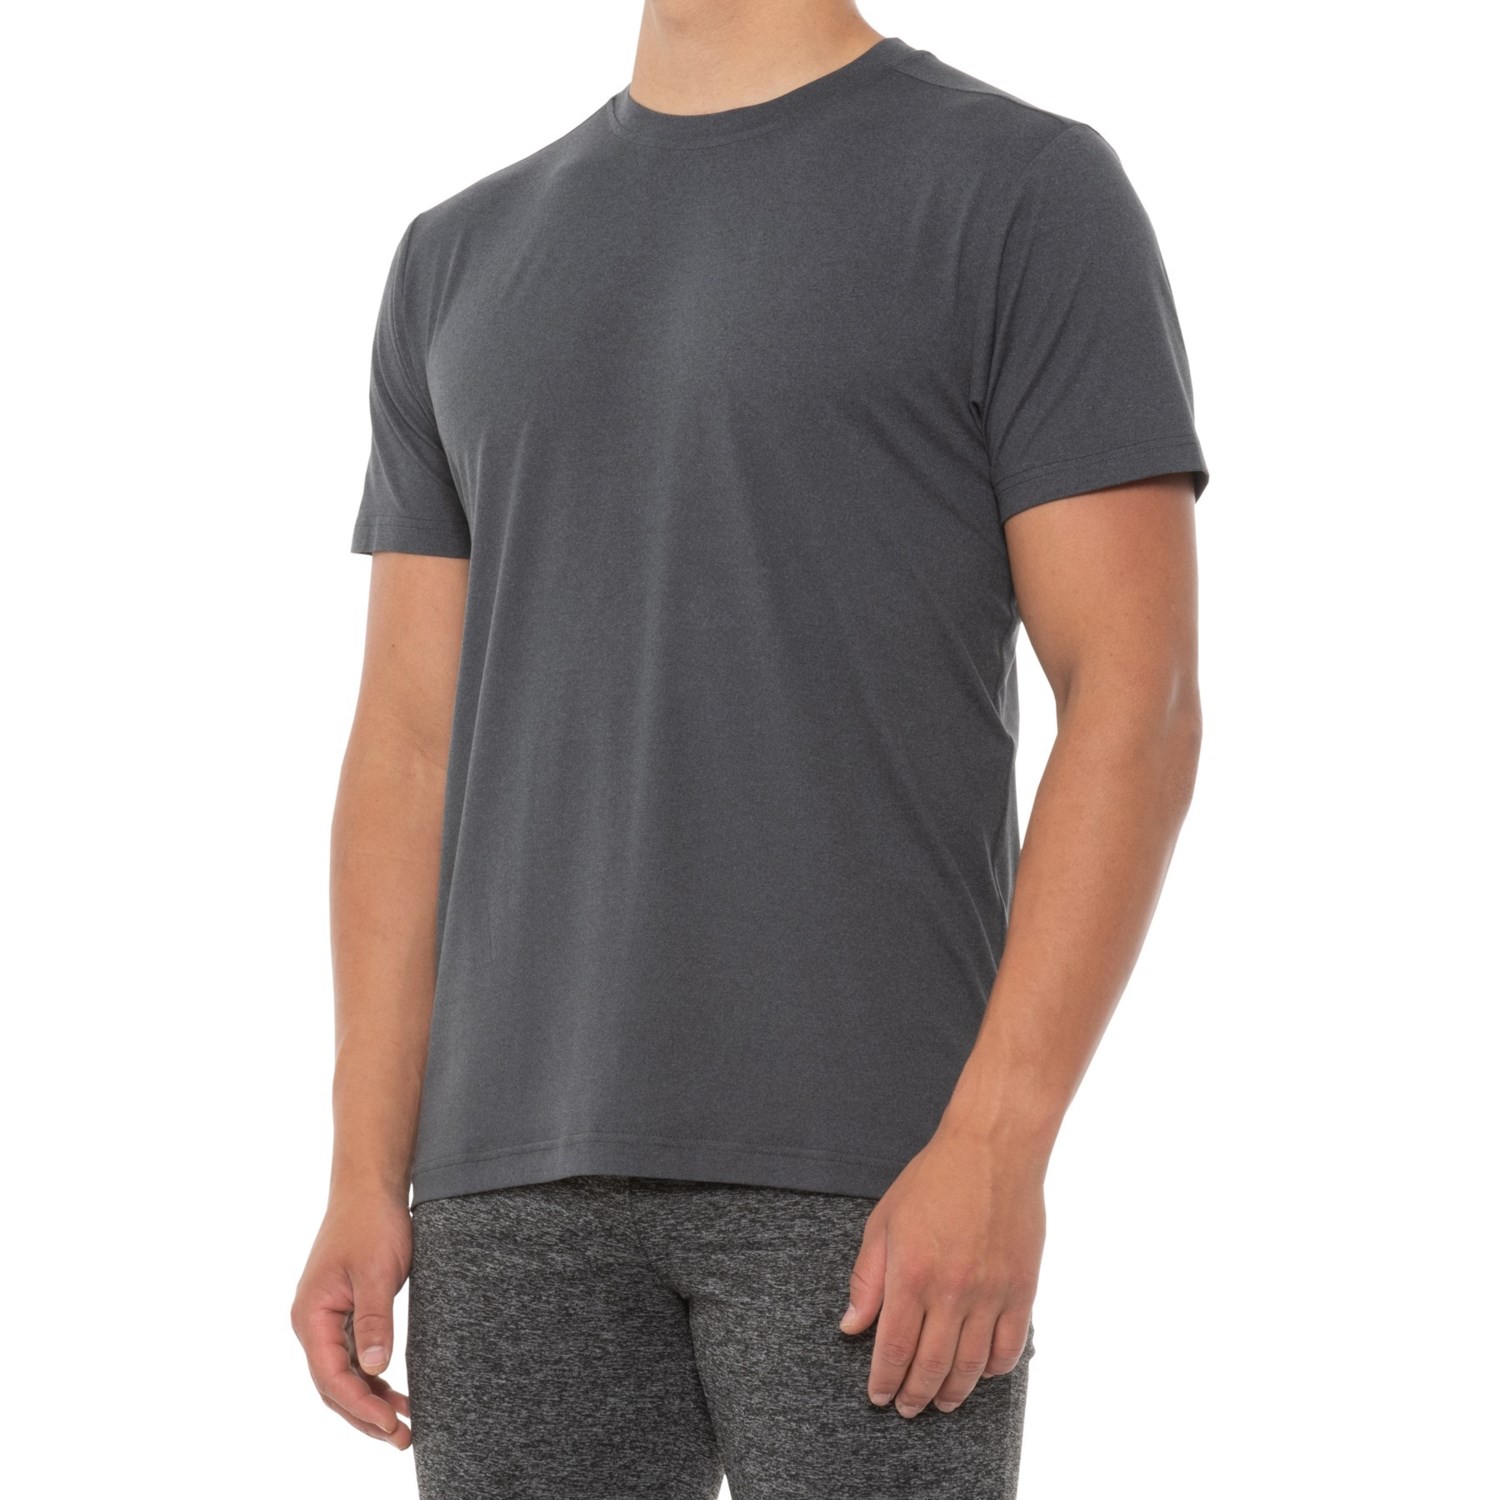 Etonic High-Performance T-Shirt (For Men) - Save 42%